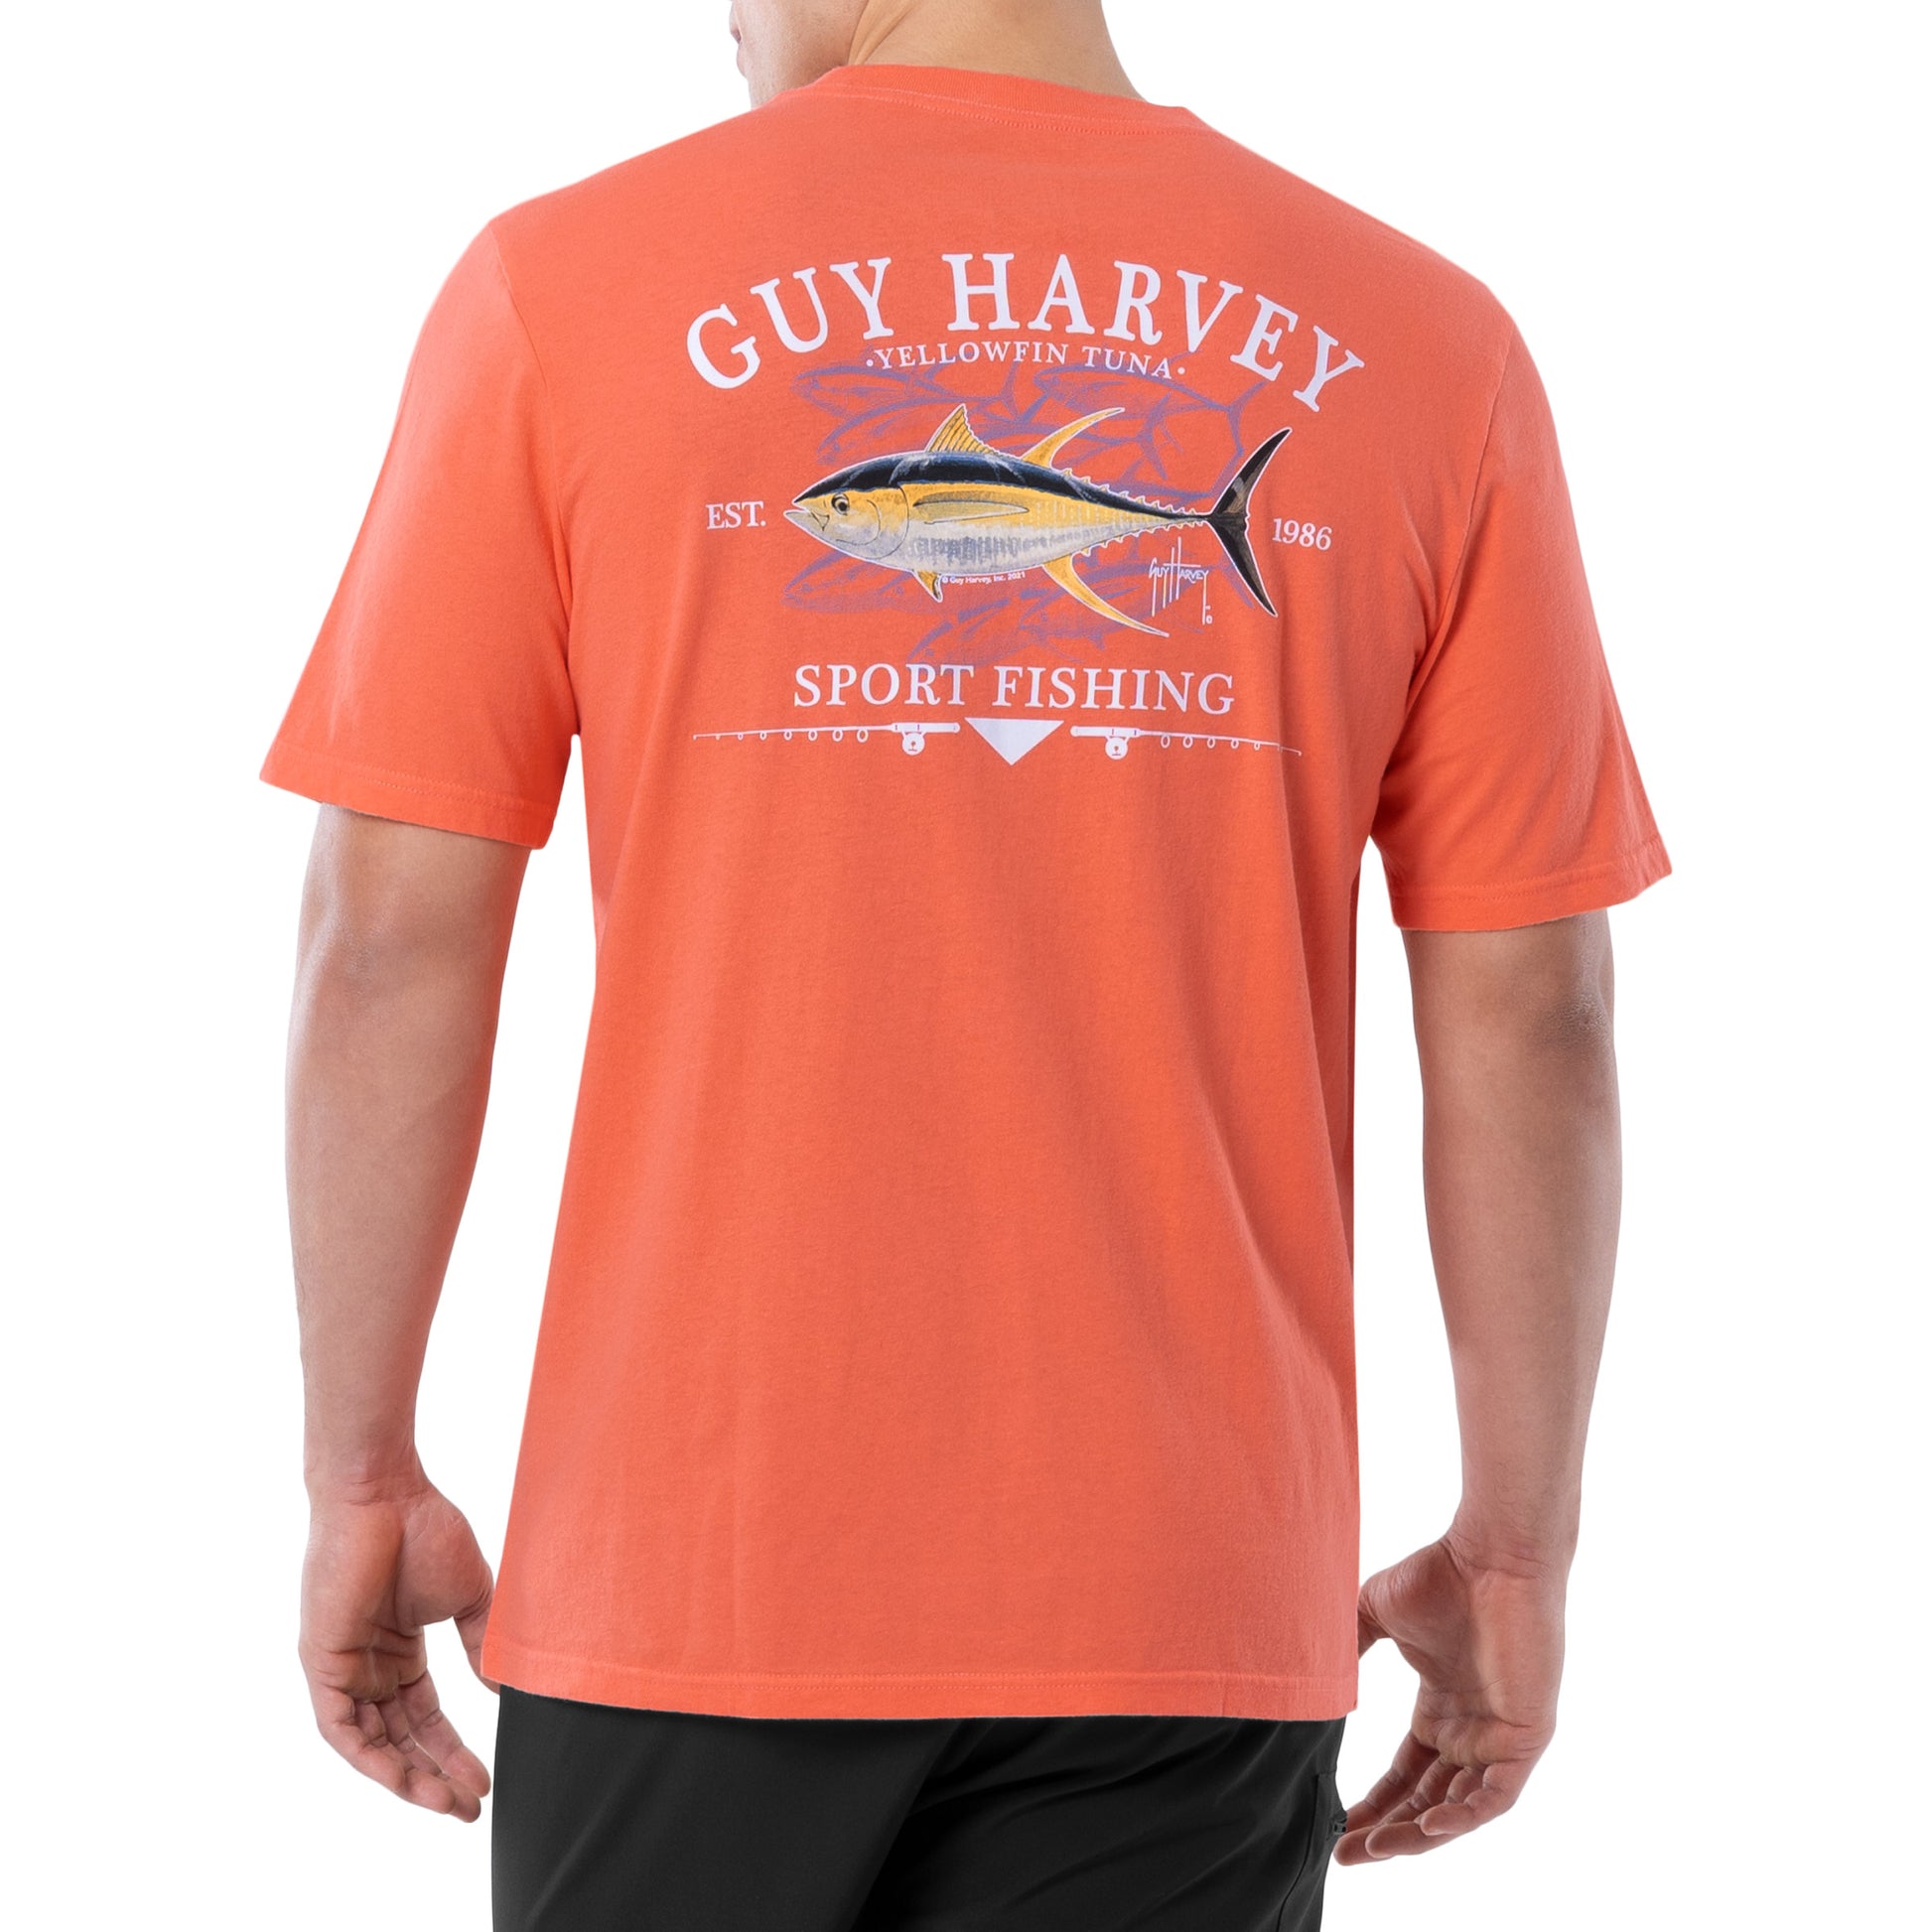 Tee Hunt Shut Up and Fish T-Shirt Funny Bass Salmon Fishing Shirt Salt  Water Fisherman Boat Shirt, Orange, Small 